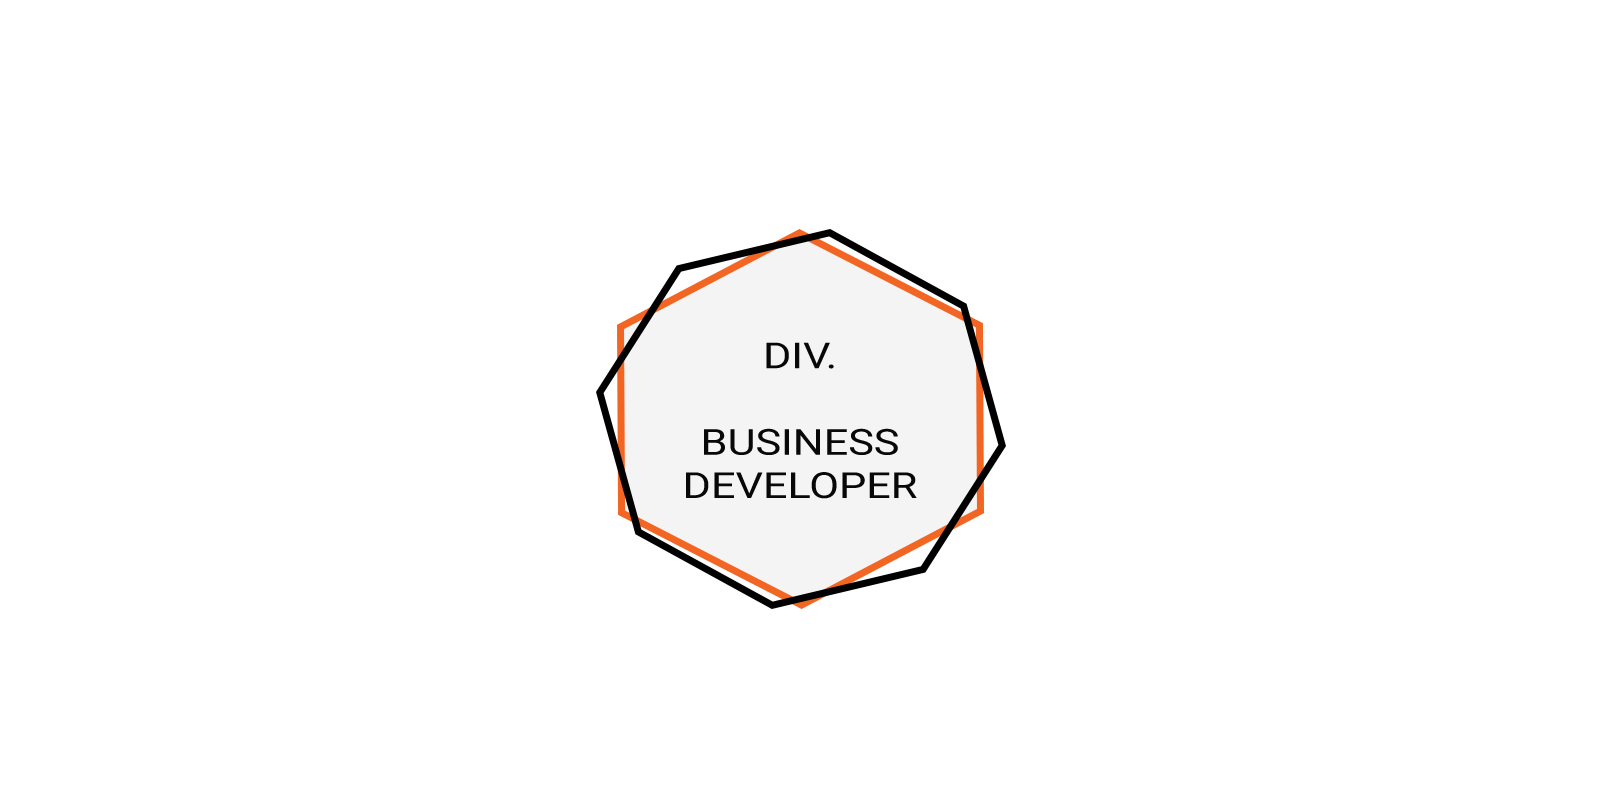 Div. Business Developer